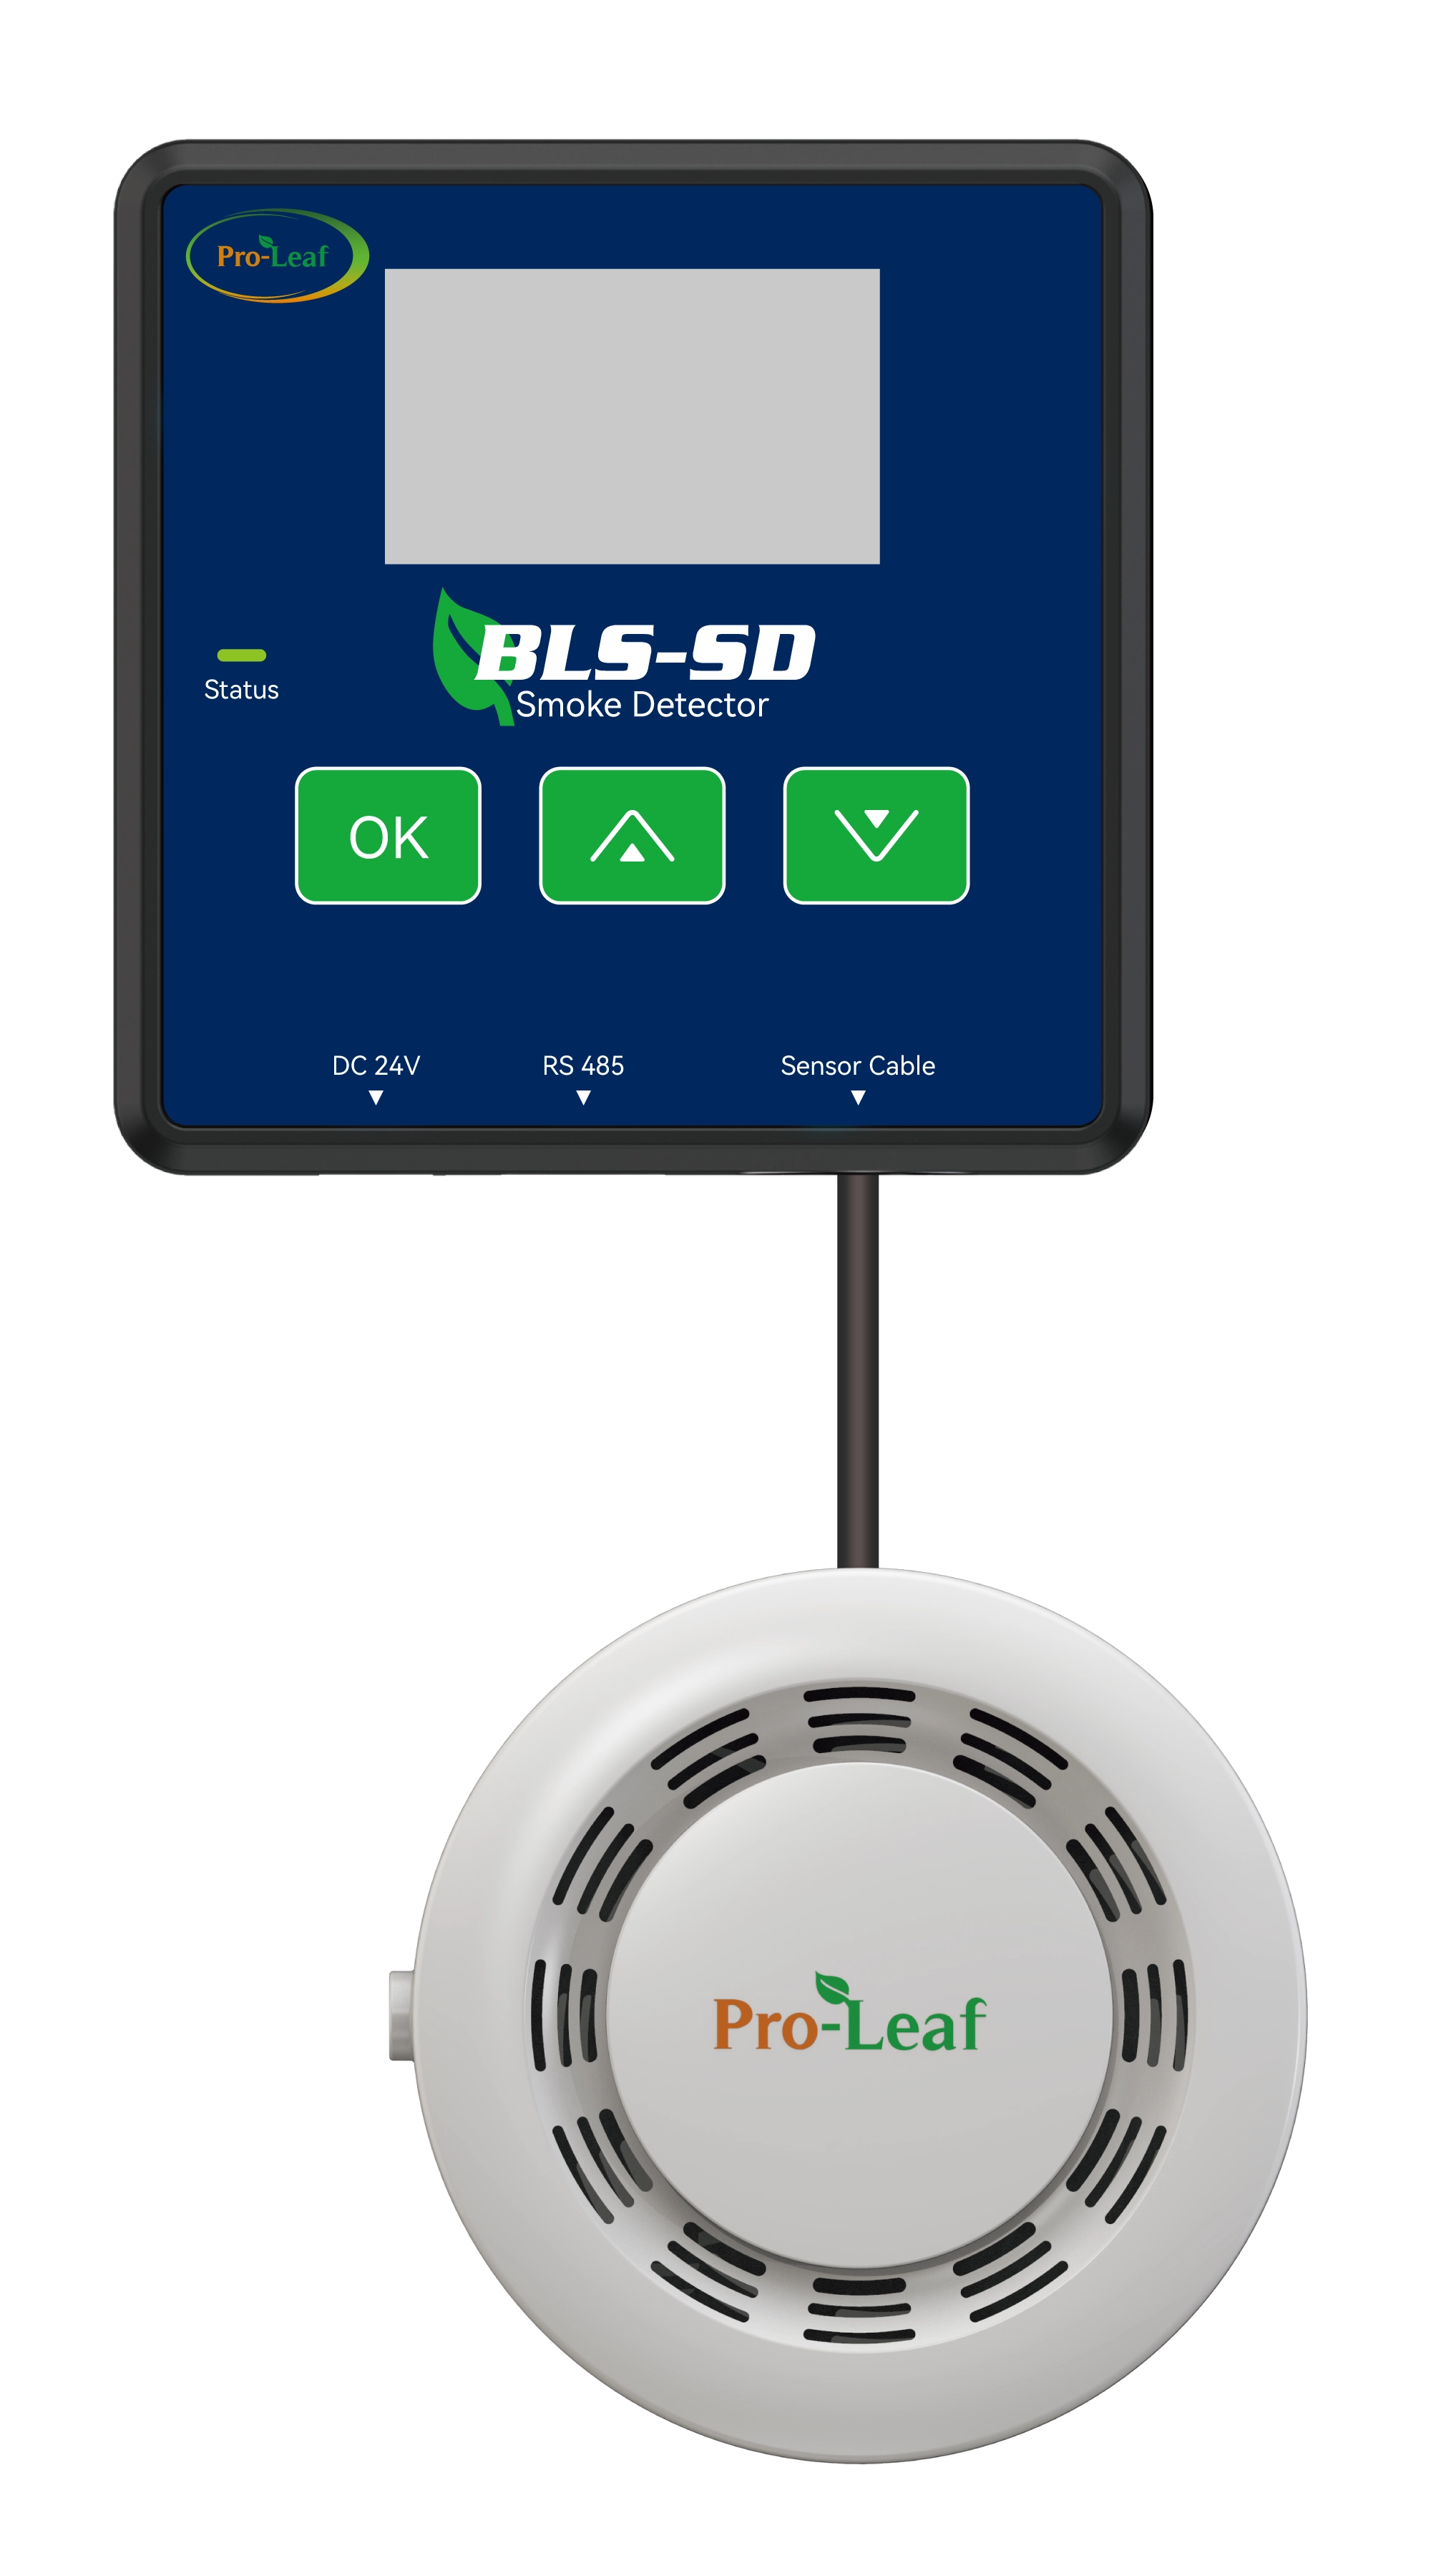 BeLeaf BeHive-E
Smoke Detector
(BLS-SD)